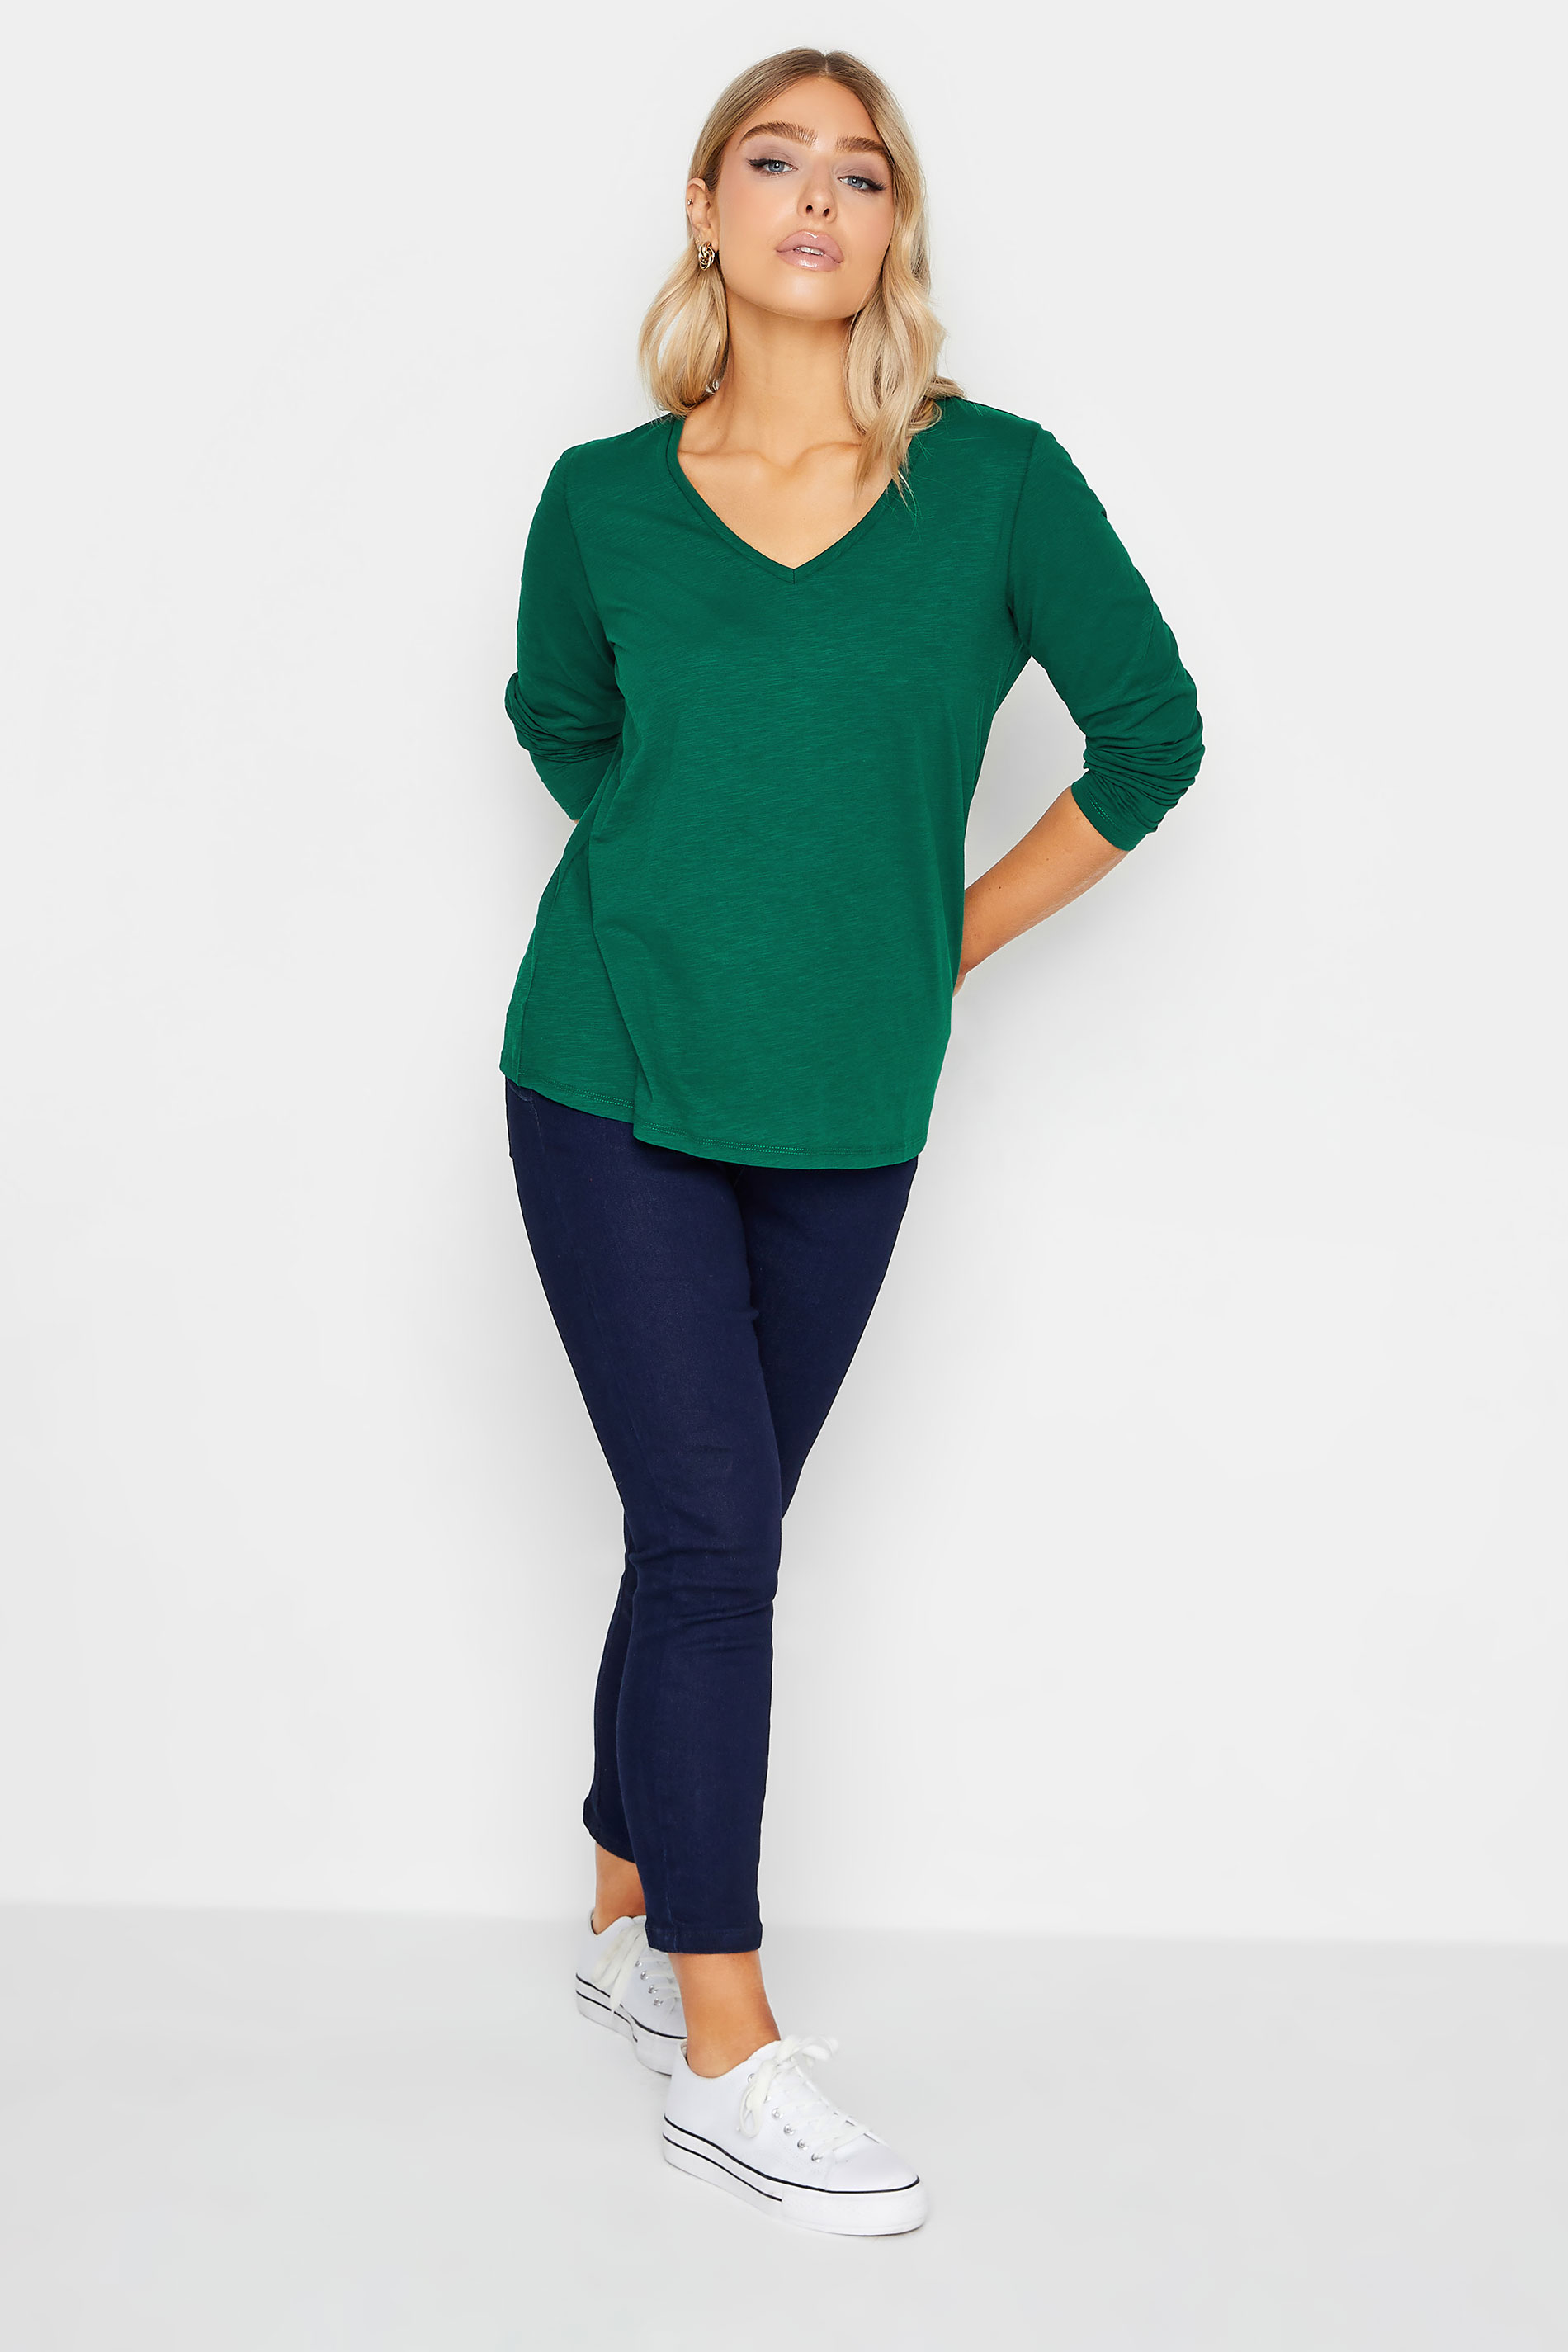 M&Co Dark Green V-Neck Long Sleeve Cotton Blend T-Shirt | M&Co 2